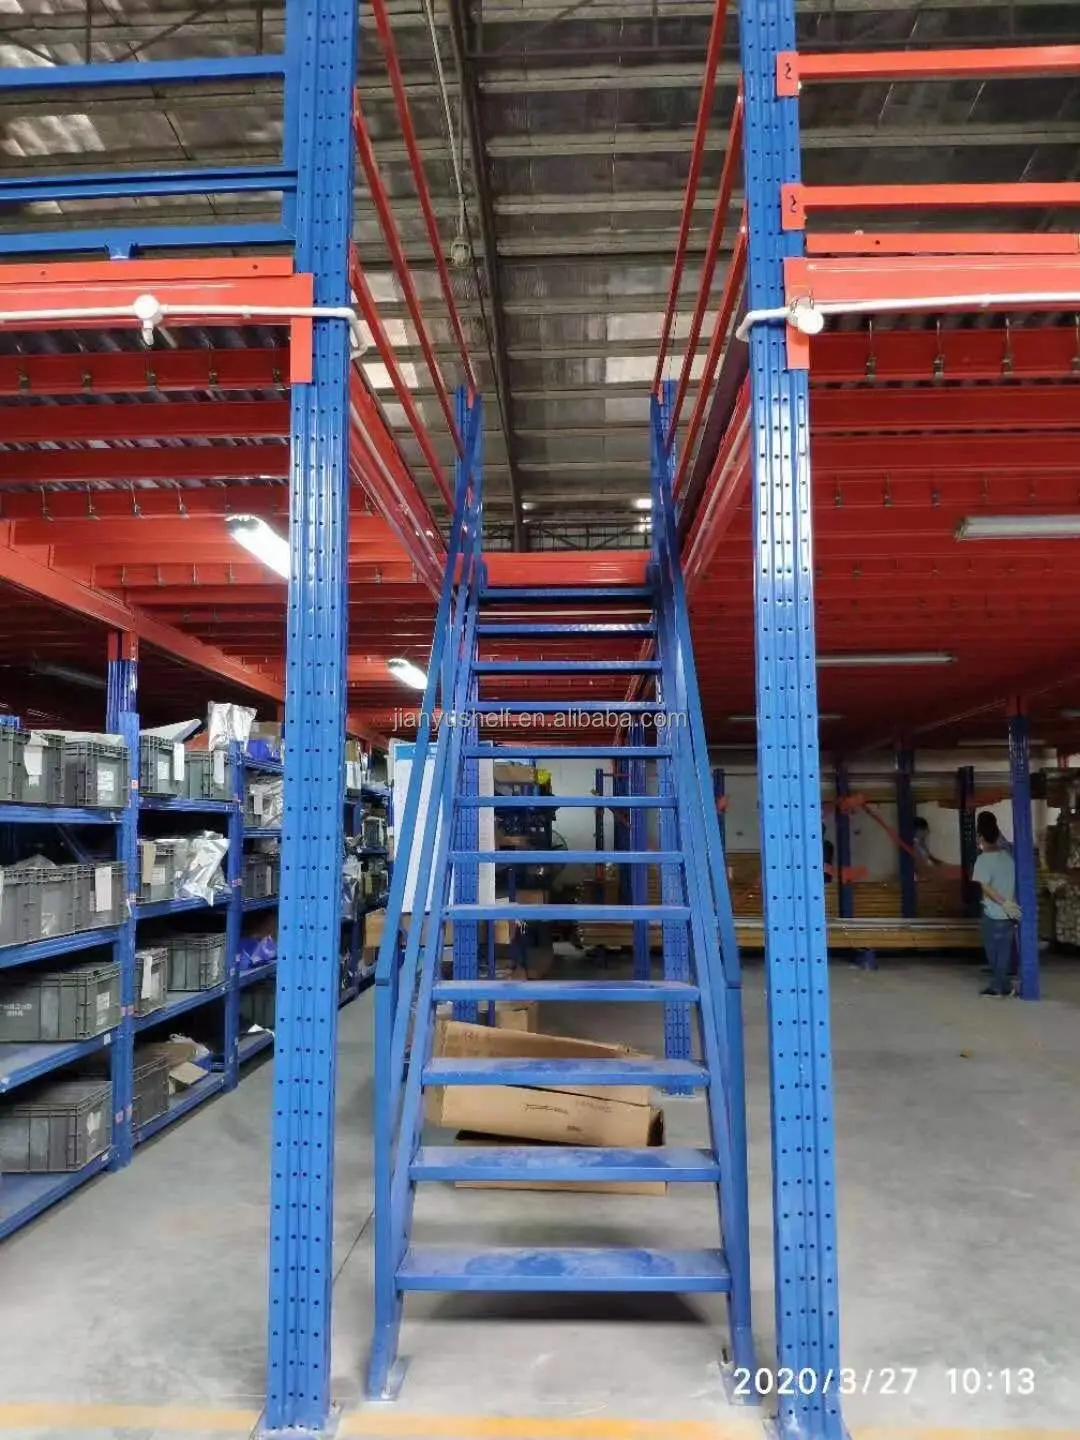 Industrial metal by design longspan display steel shelving warehouse high level storage platform rack mezzanine shelf details